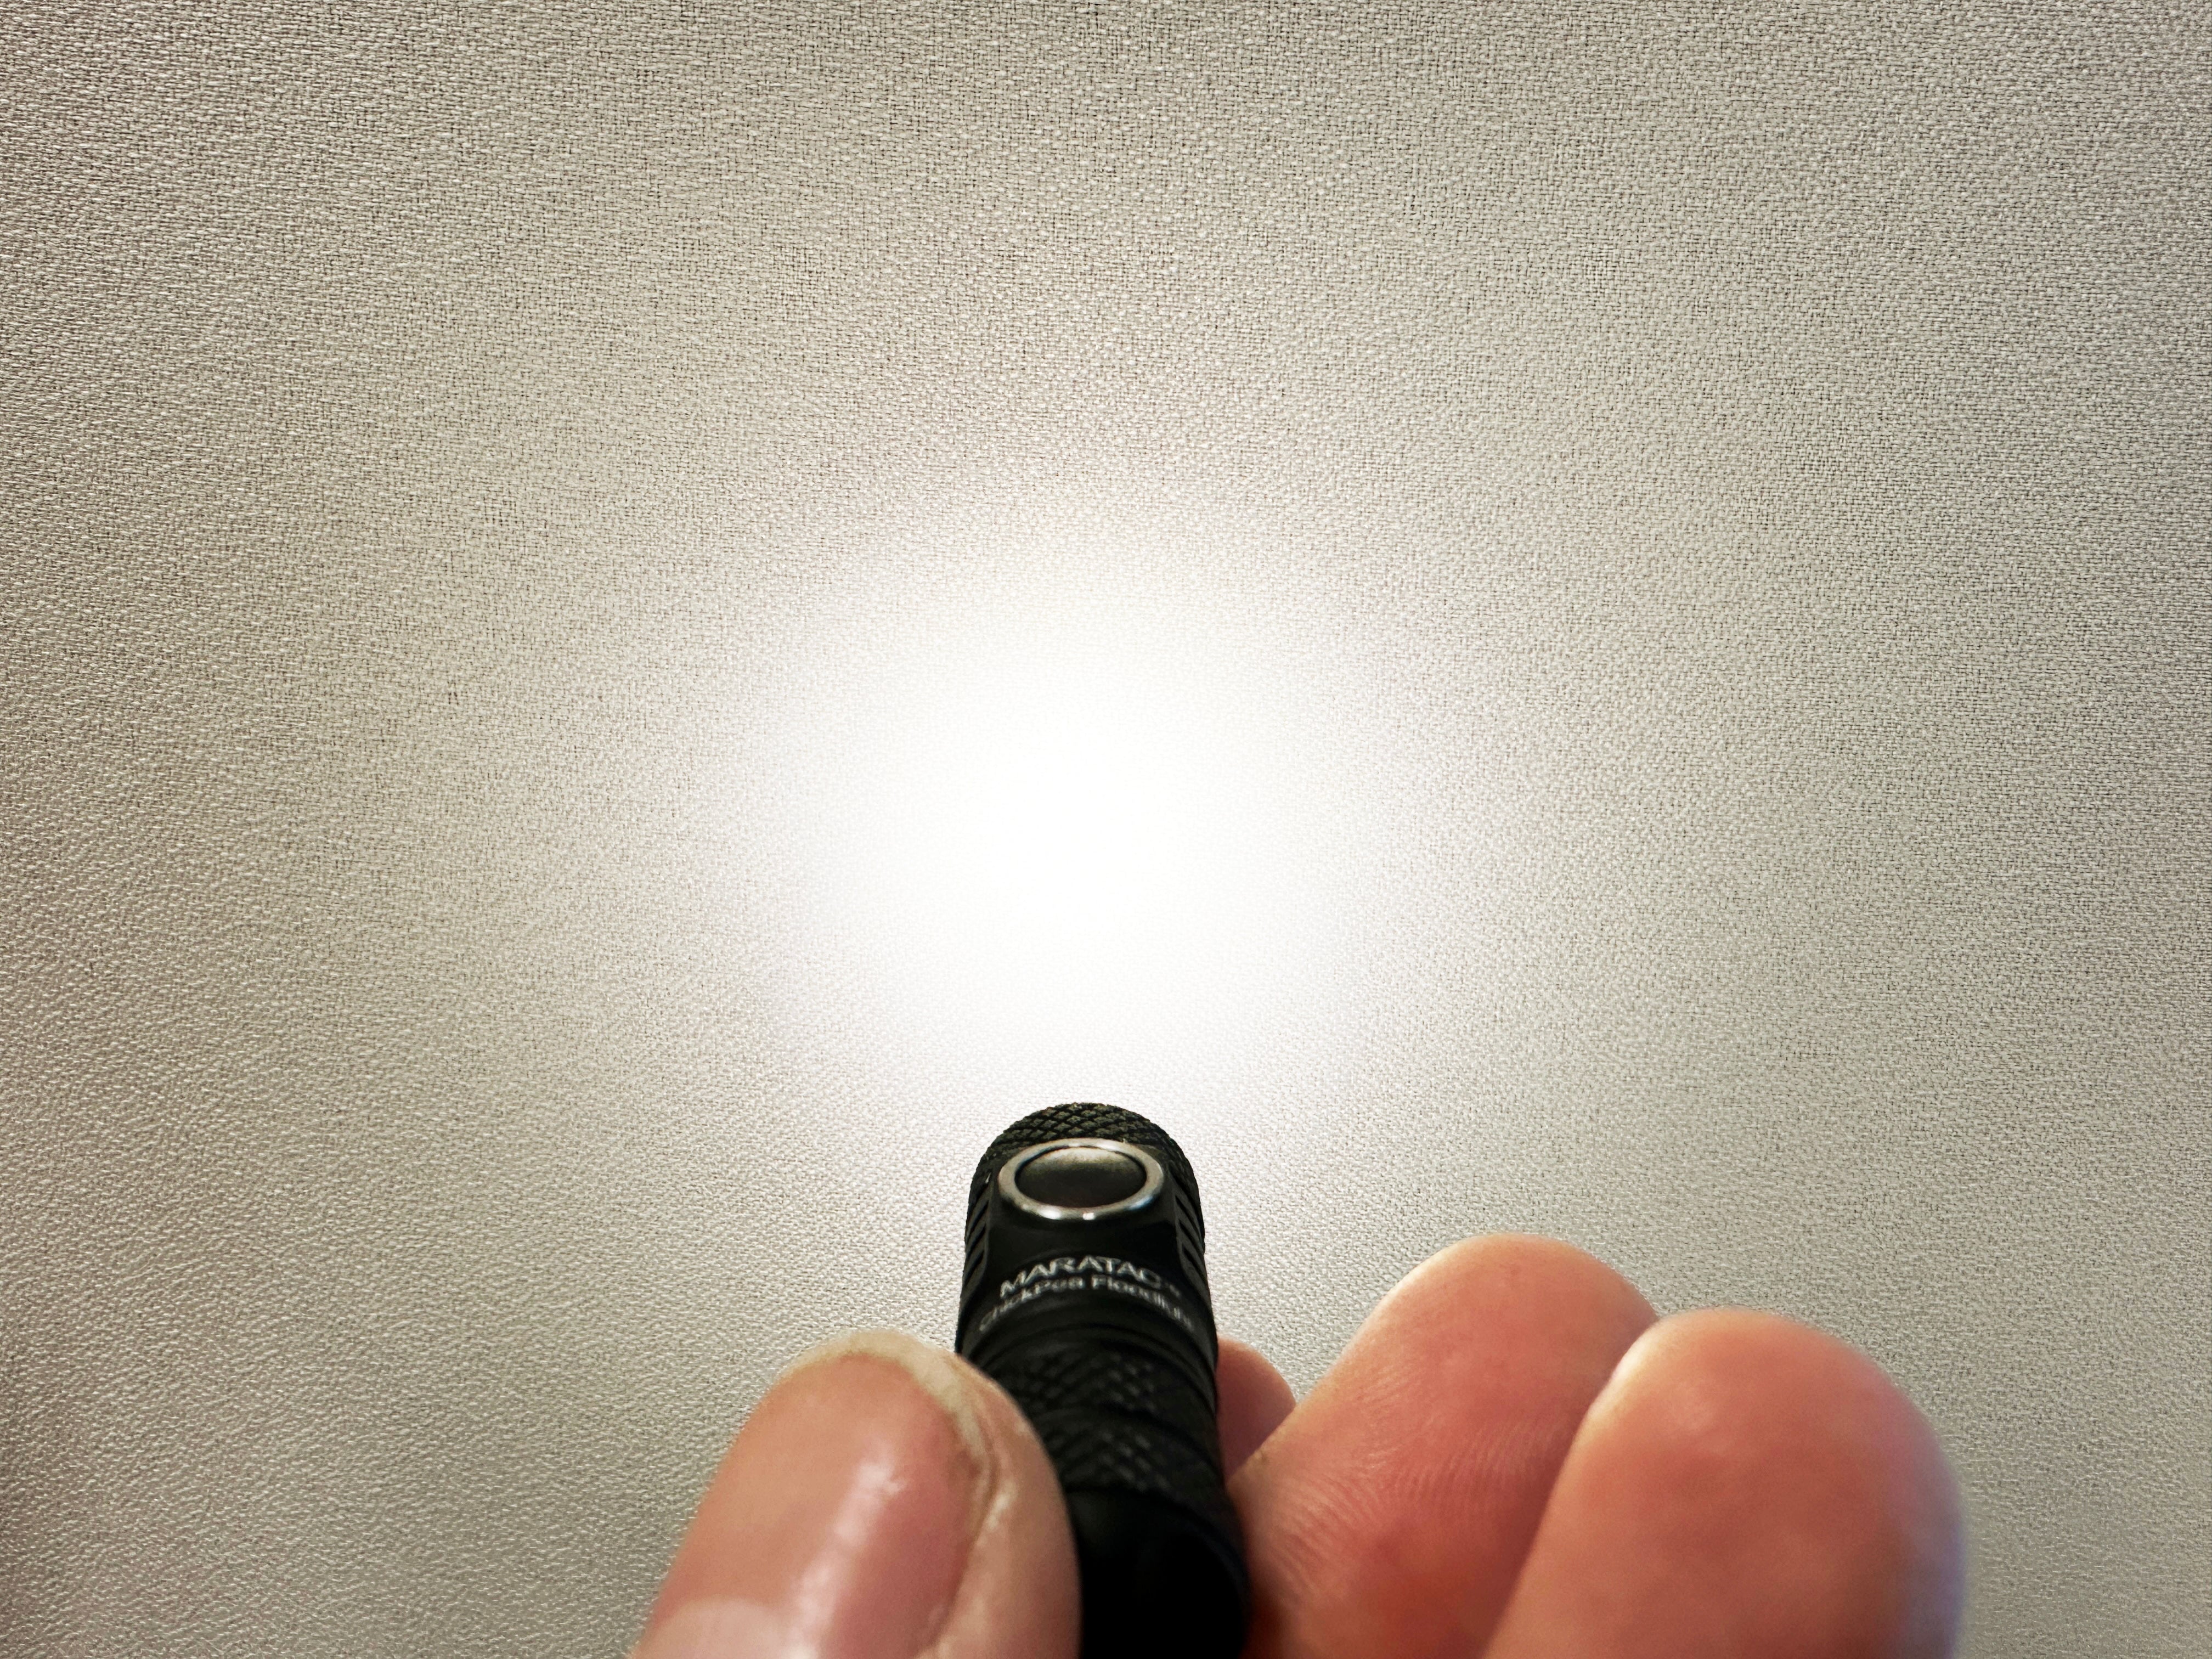 Chickpea - Black - Floodlight LED Flashlight 10180 by Maratac®